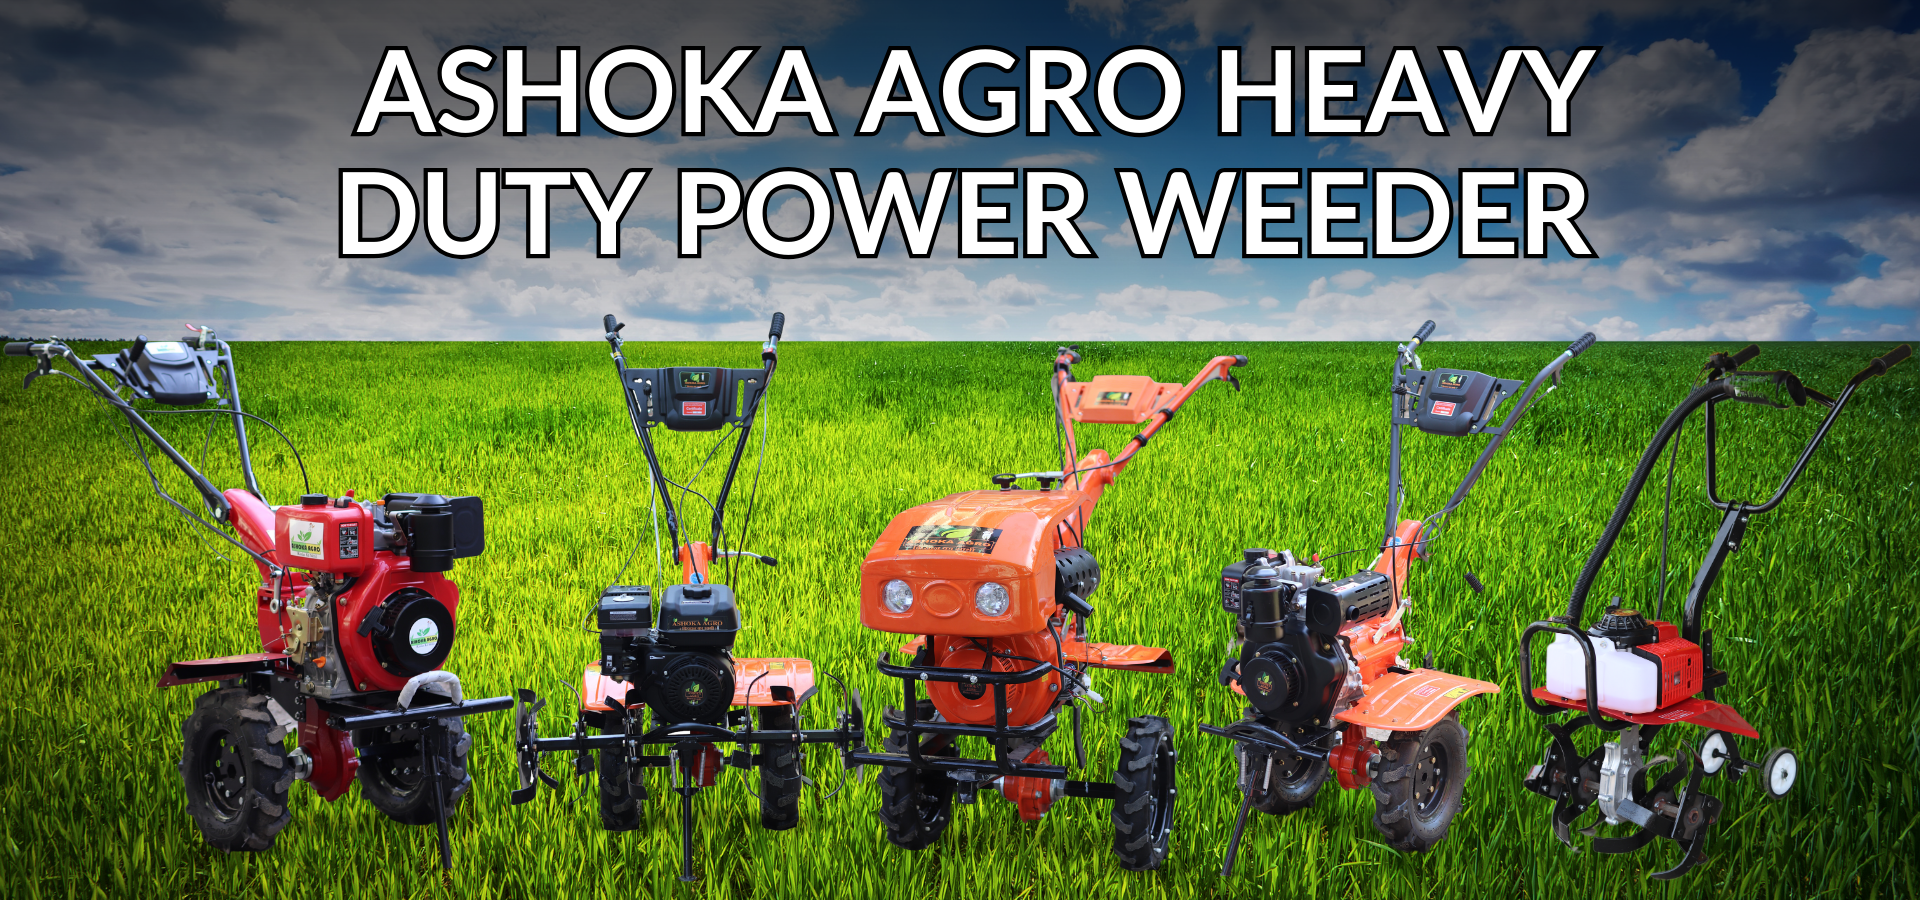 Ashoka Agro heavy Duty power weeder